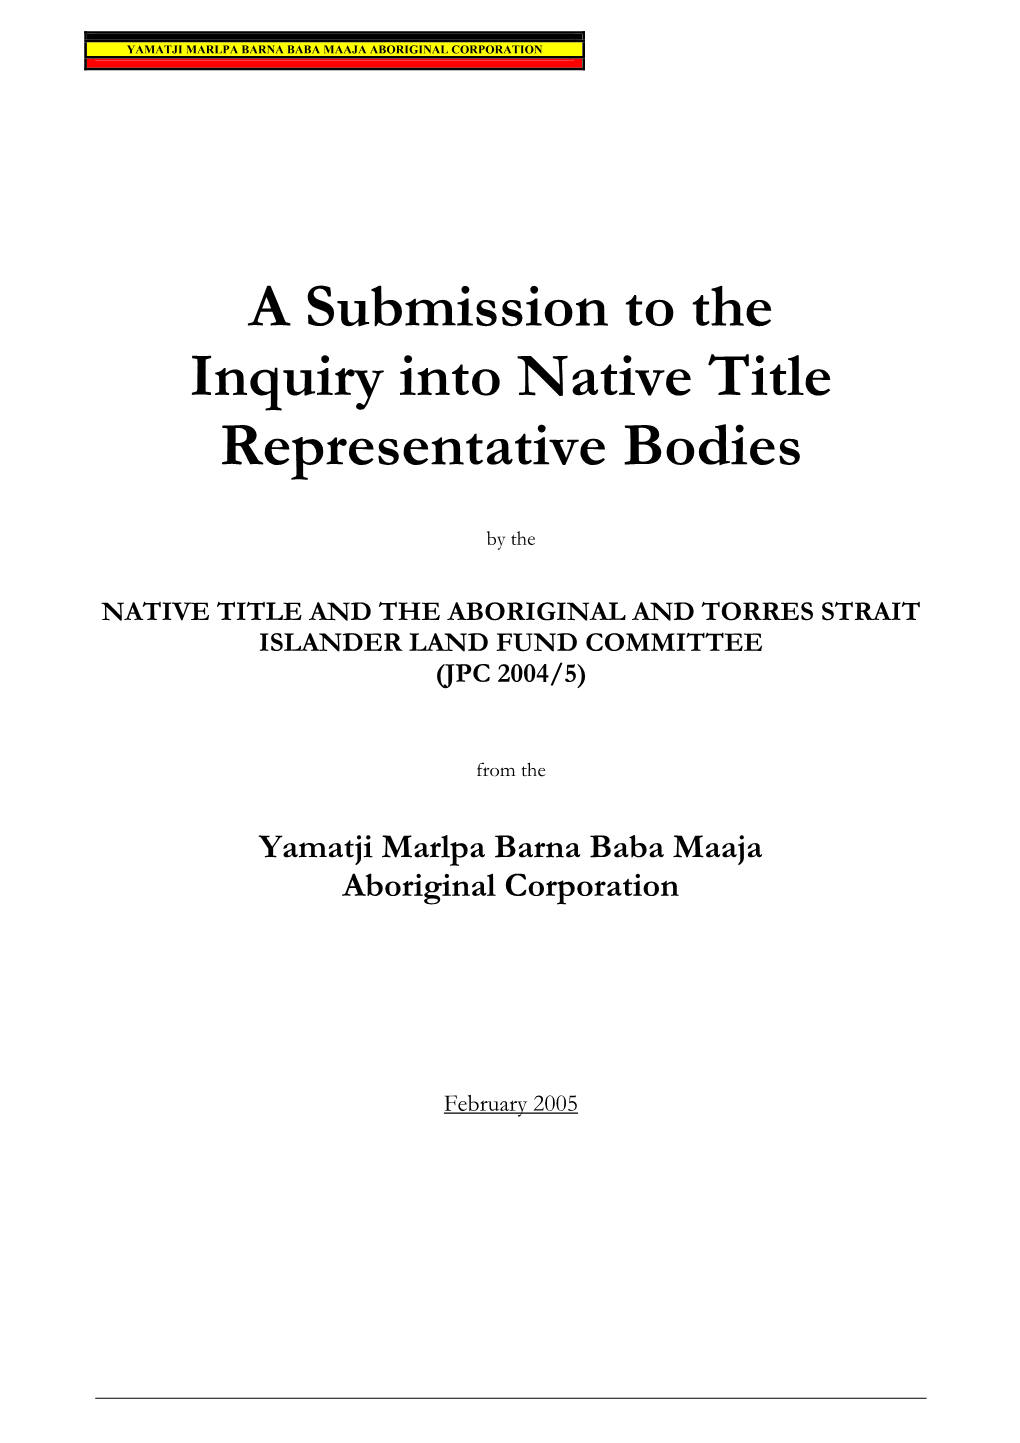 Submission to the Inquiry Into Native Title Representative Bodies